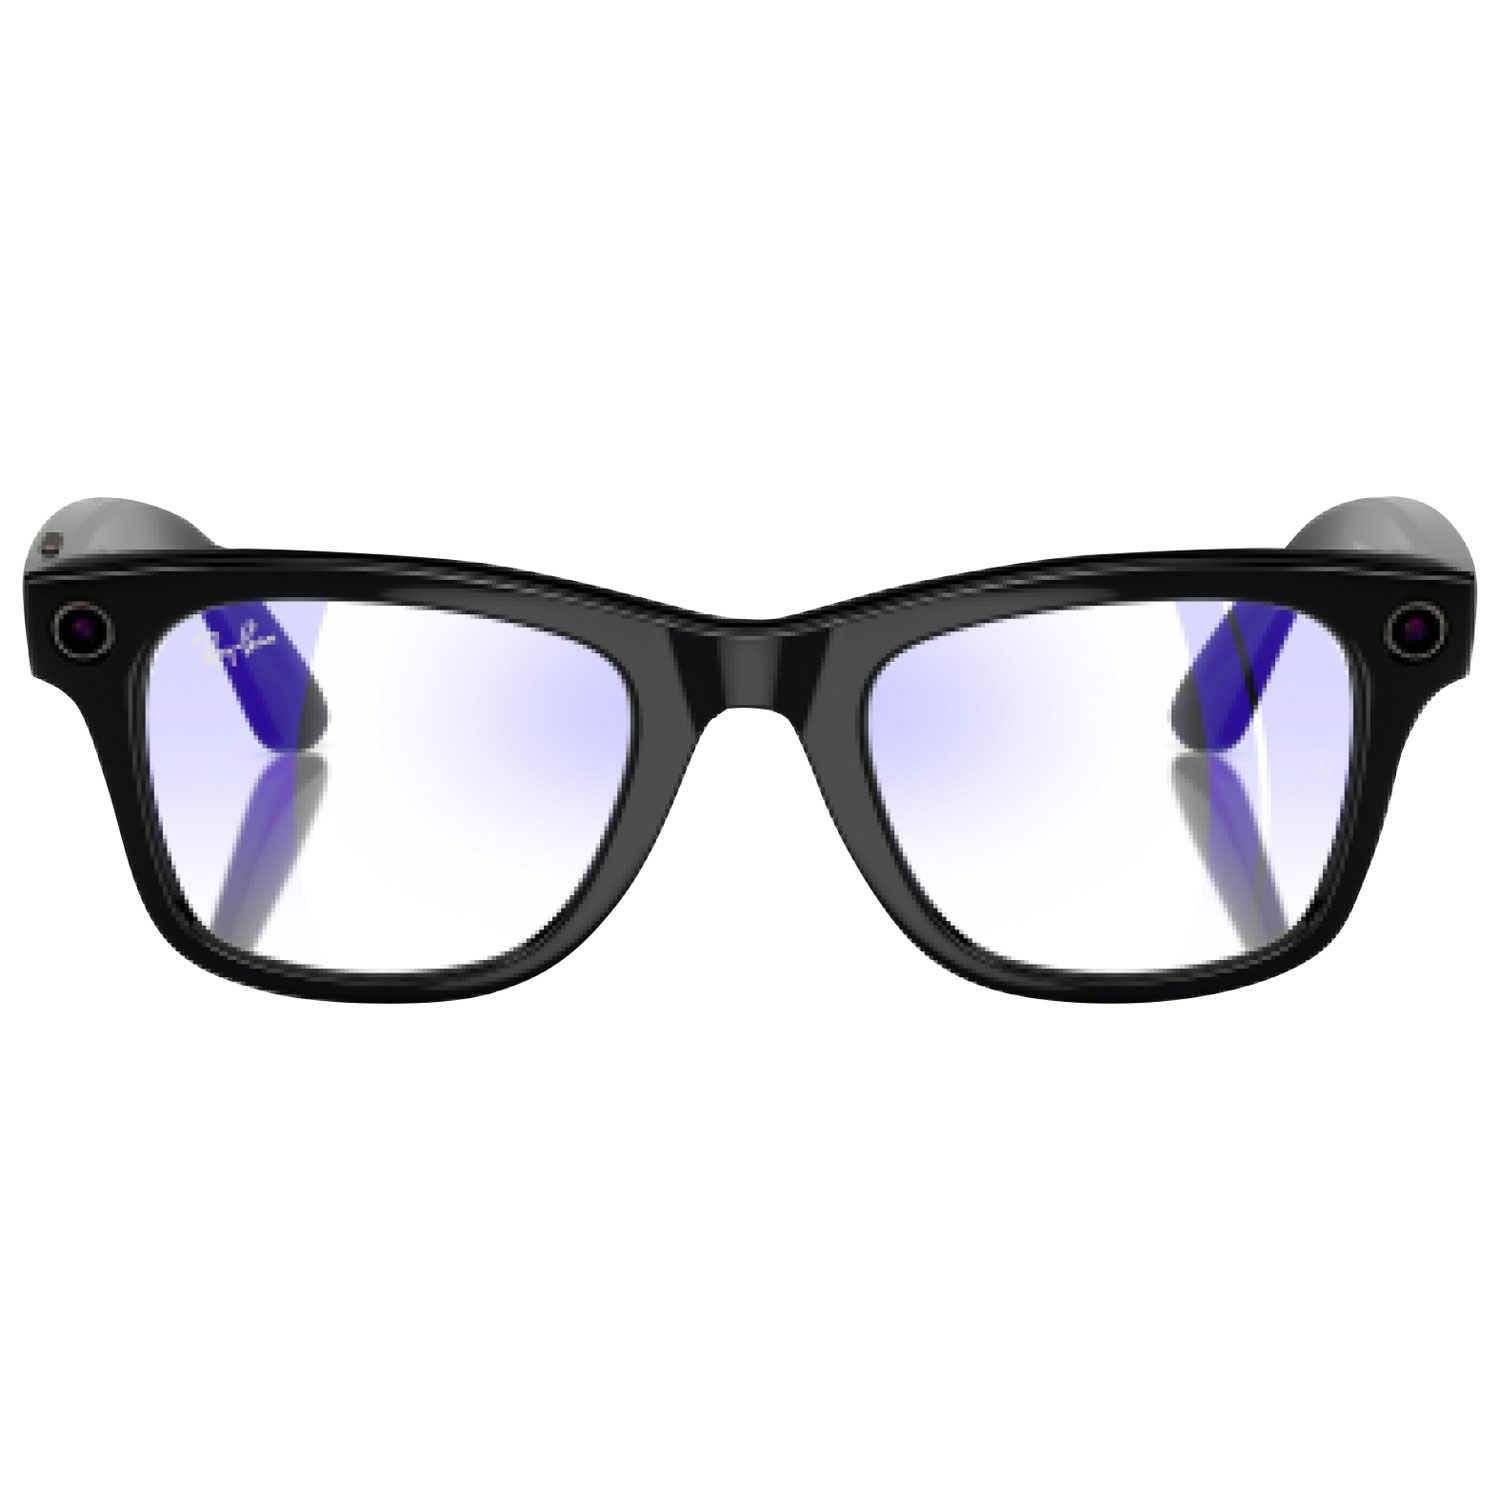 Ray-Ban | Meta Wayfarer Smart Glasses with Photo, Video & Audio - Shiny Black/Clear